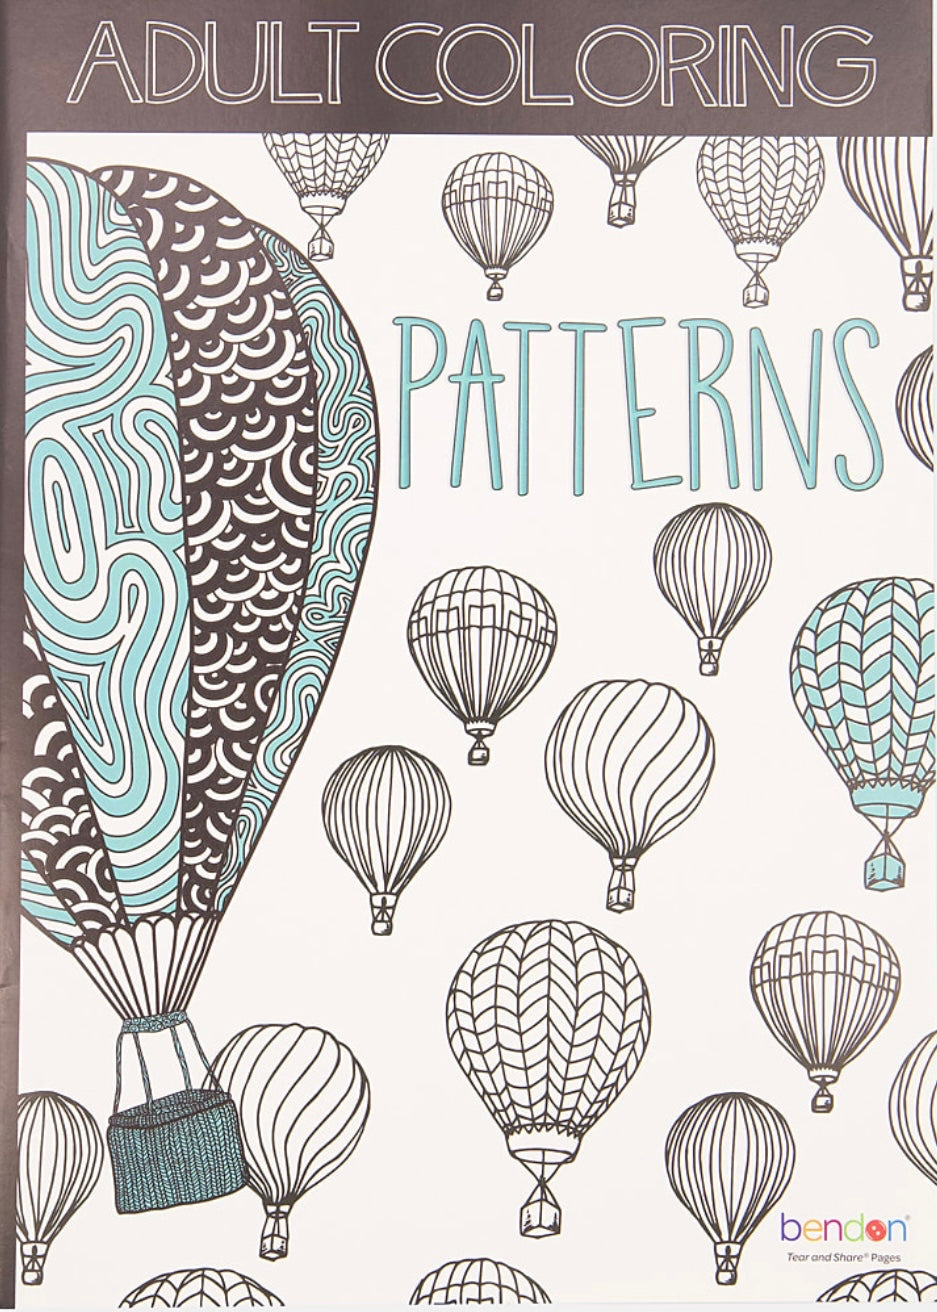 Bendon coloring book-Patterns